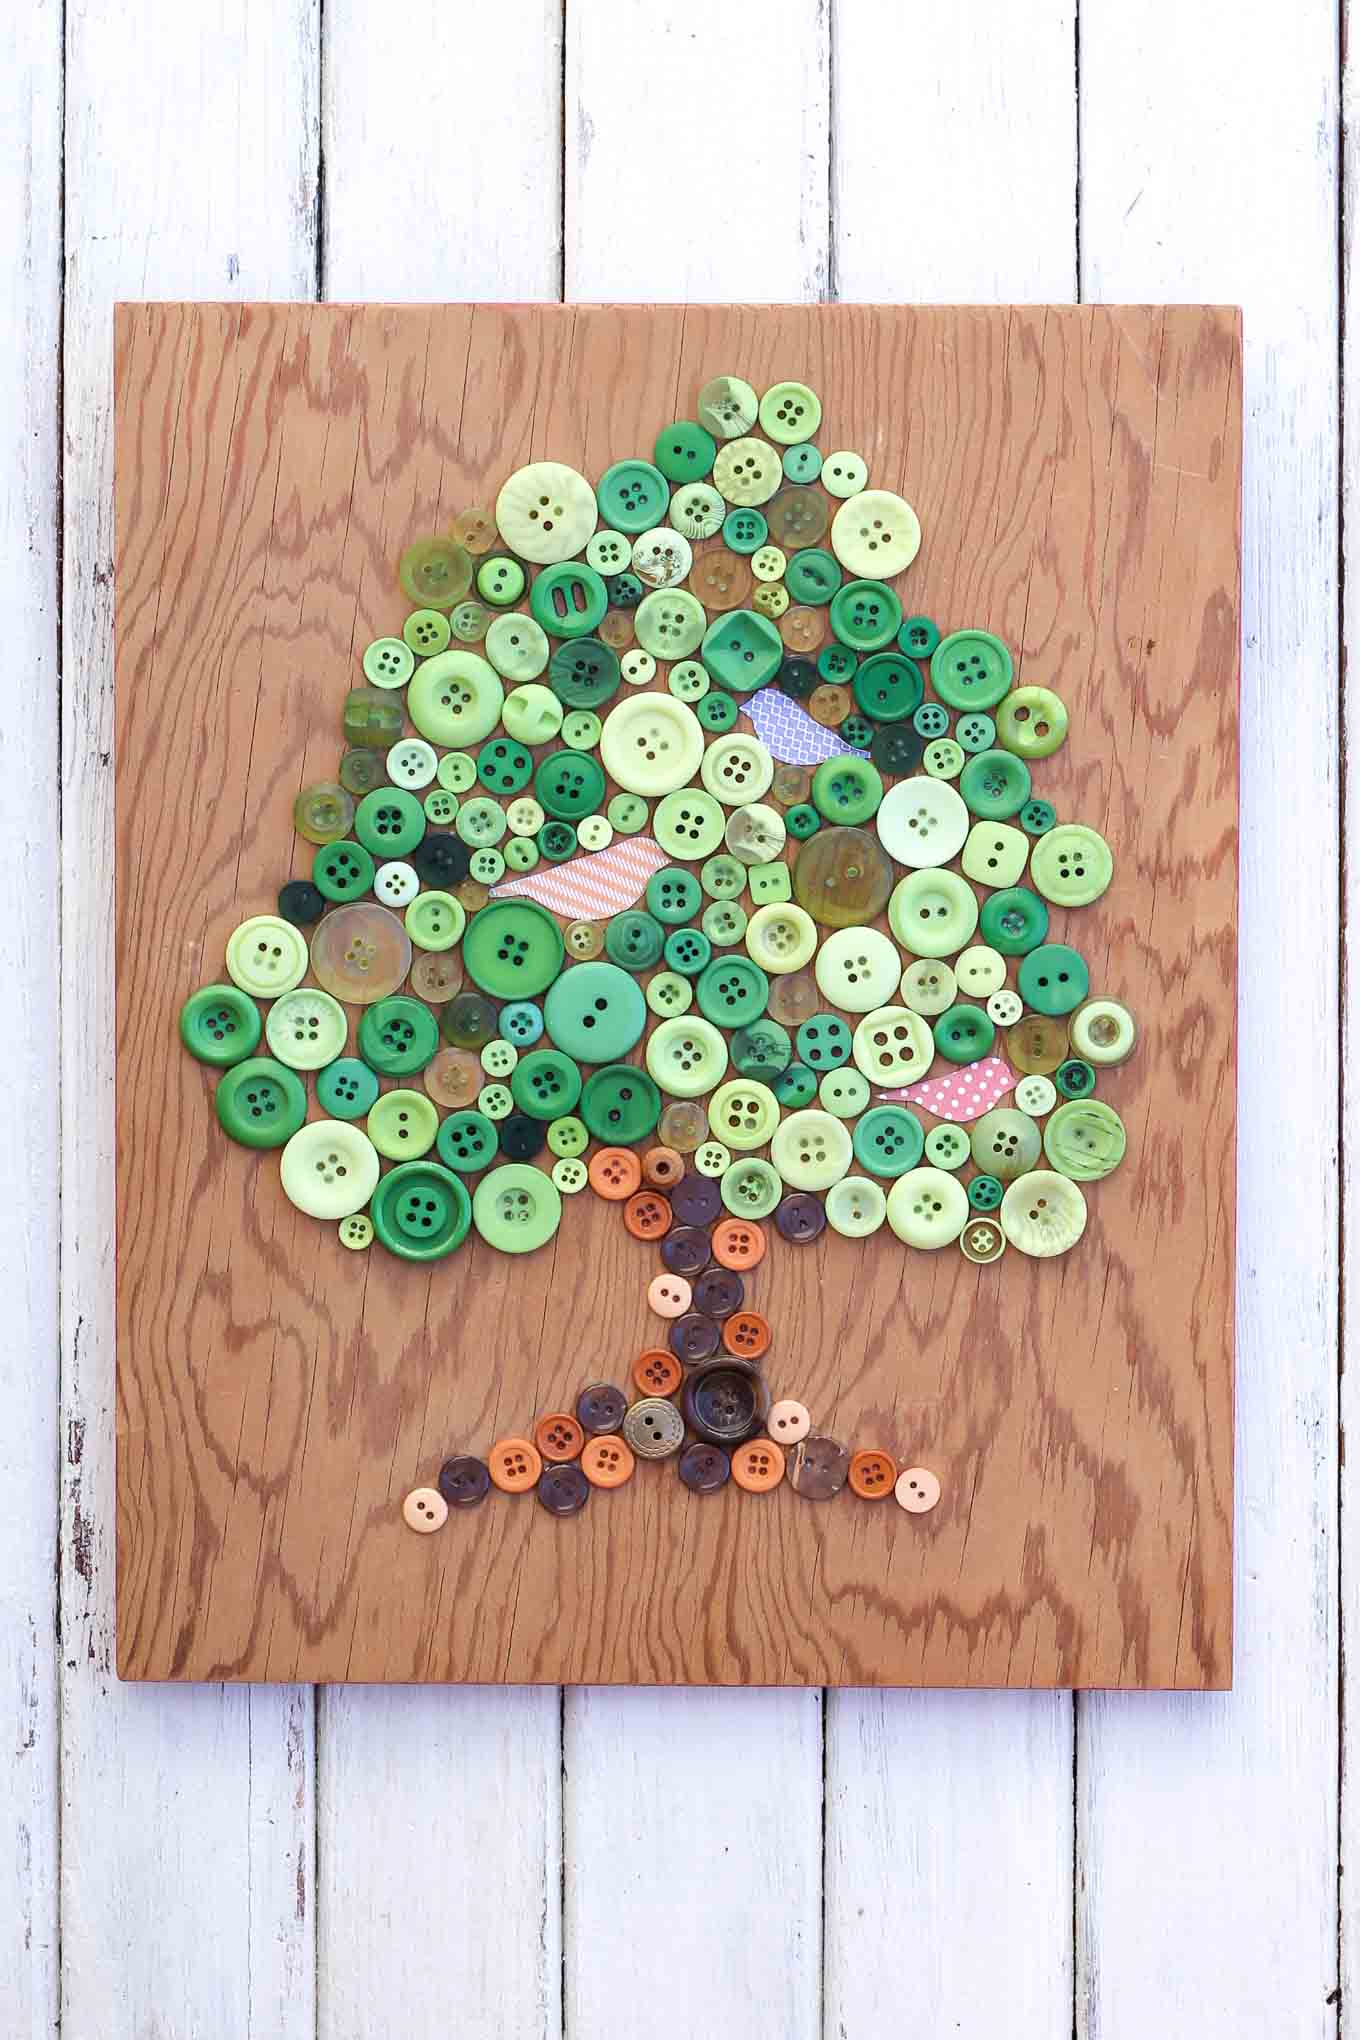 DIY tree wall art of buttons (via makeanddocrew)